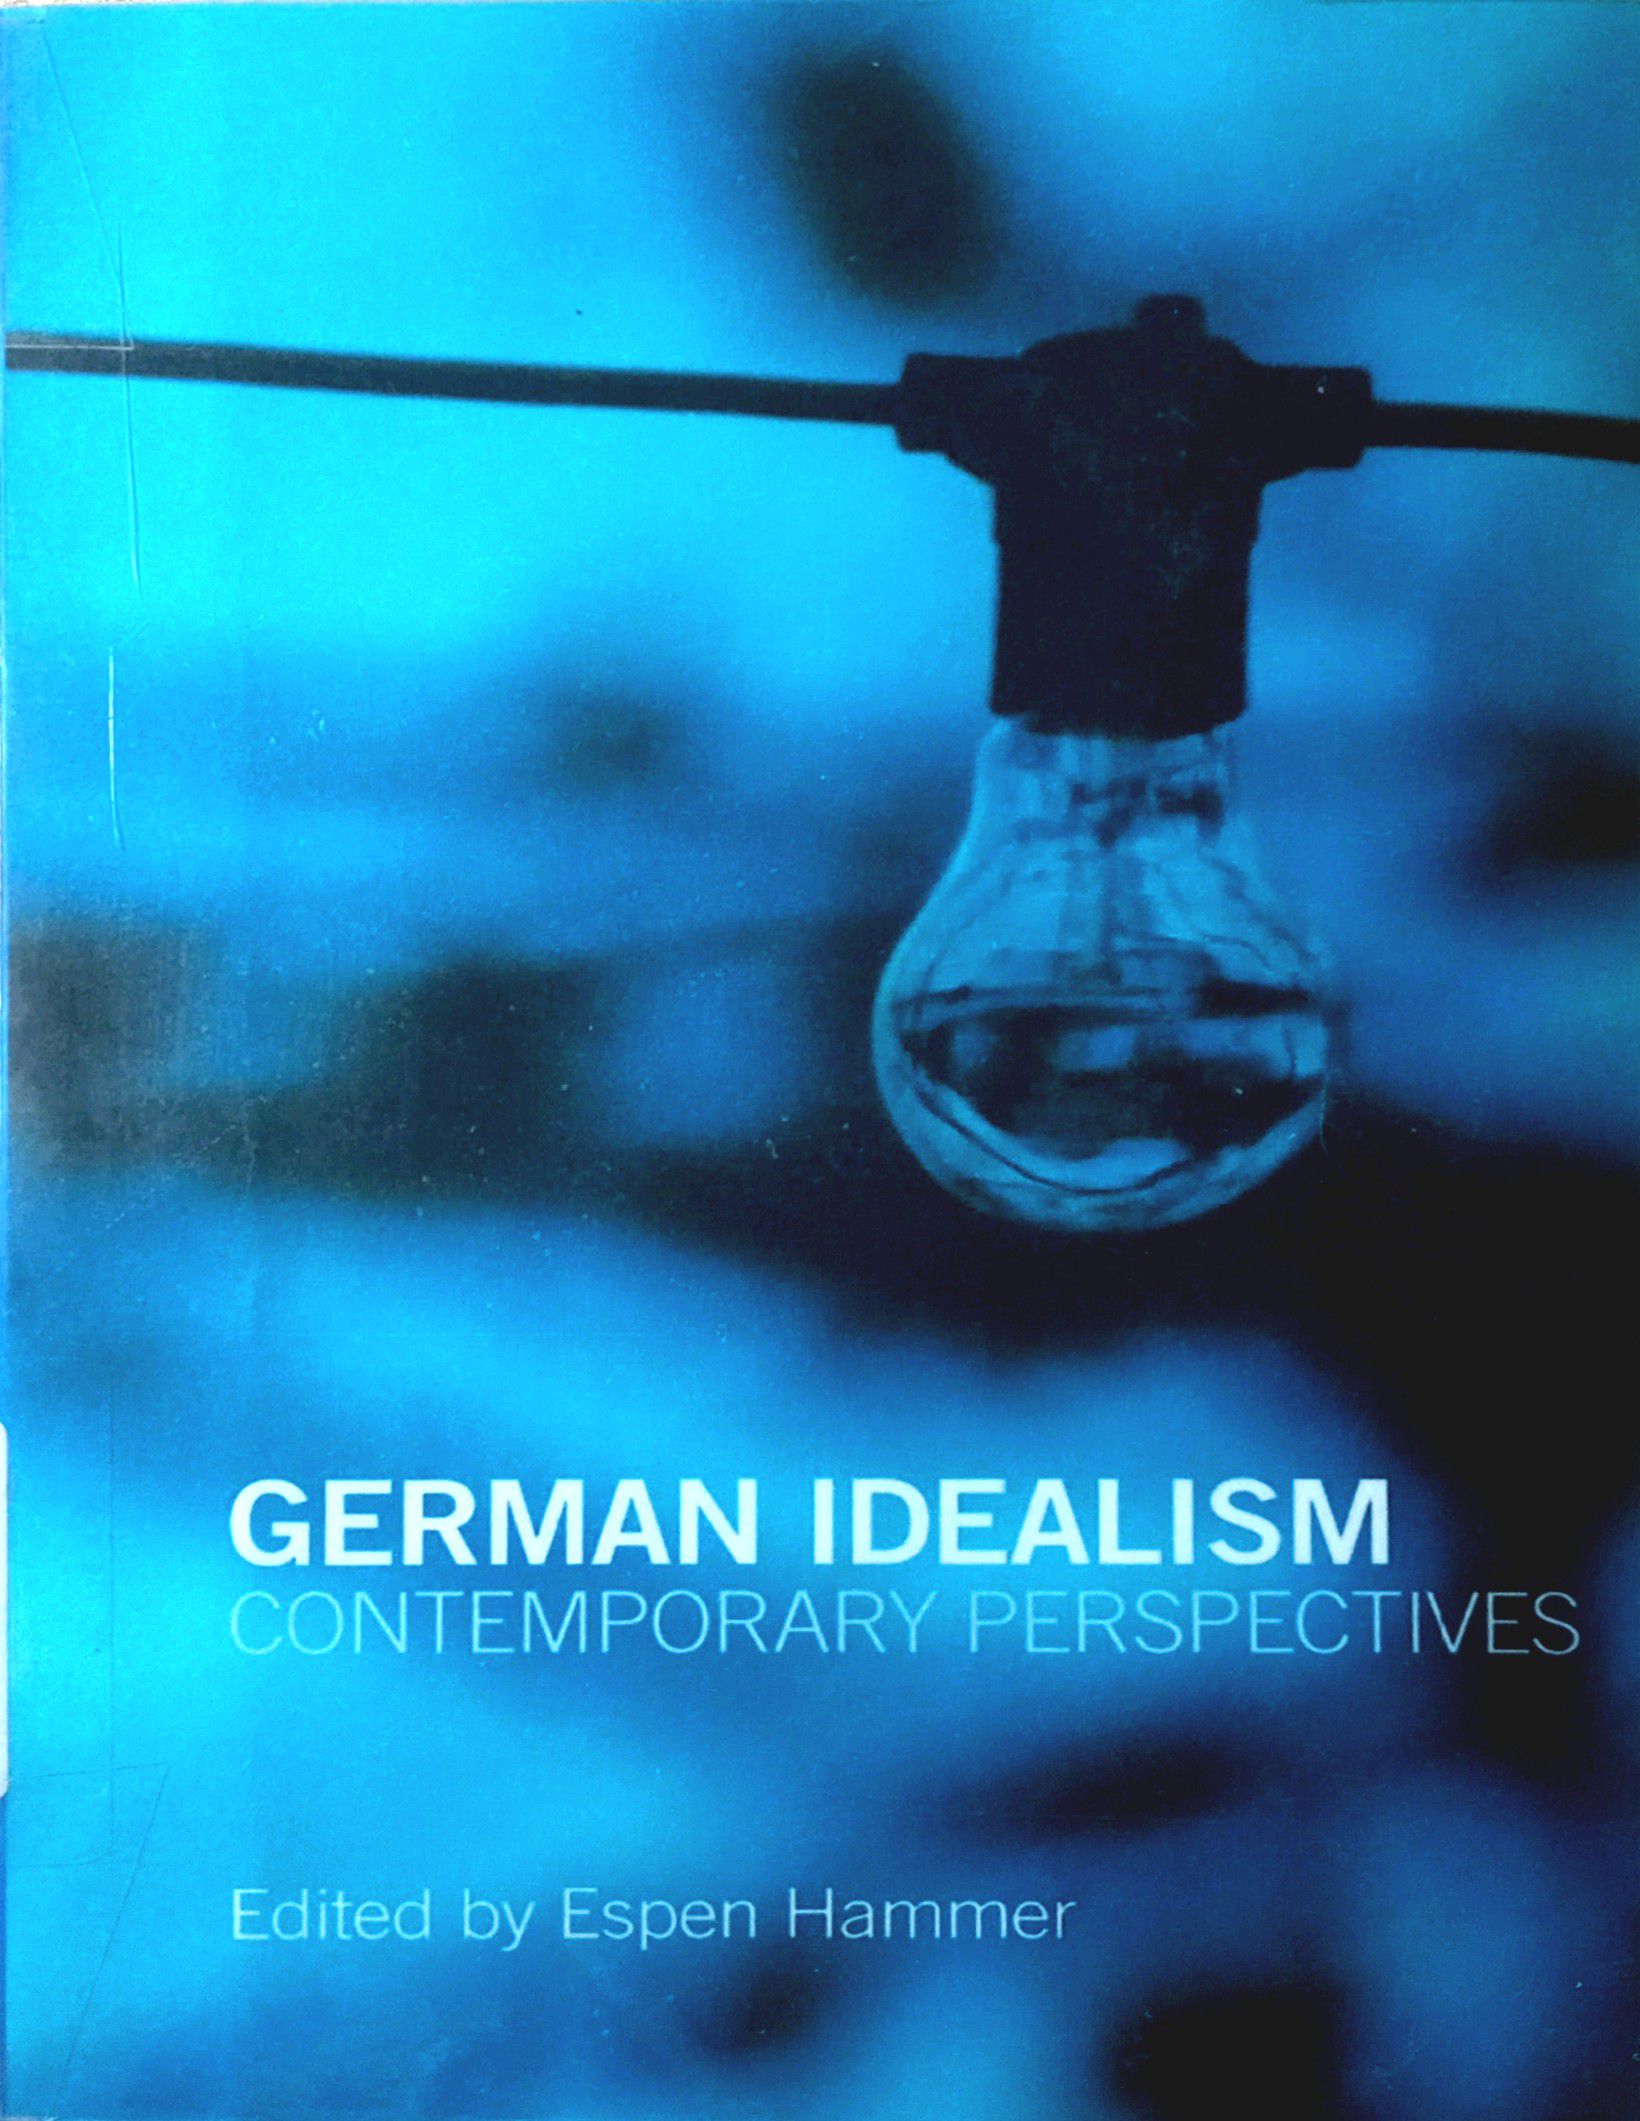 GERMAN IDEALISM